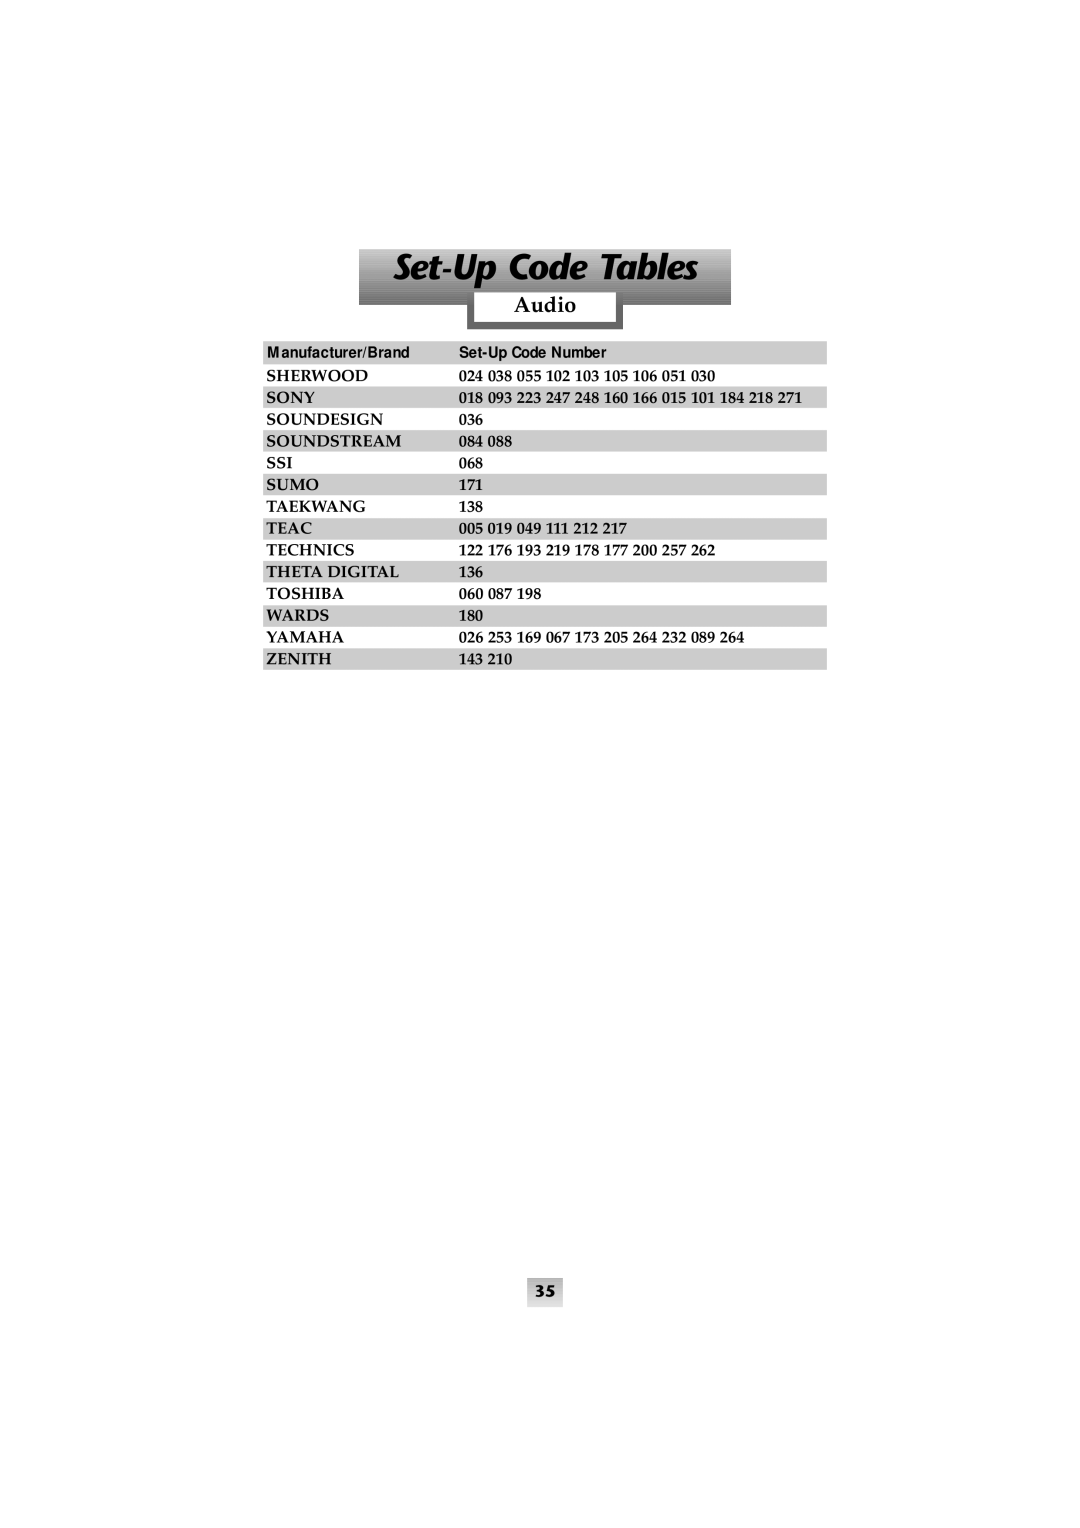 Universal Remote Control SL-8000 manual Set-Up Code Tables, Audio, Set-Up Code Number, Manufacturer/Brand 